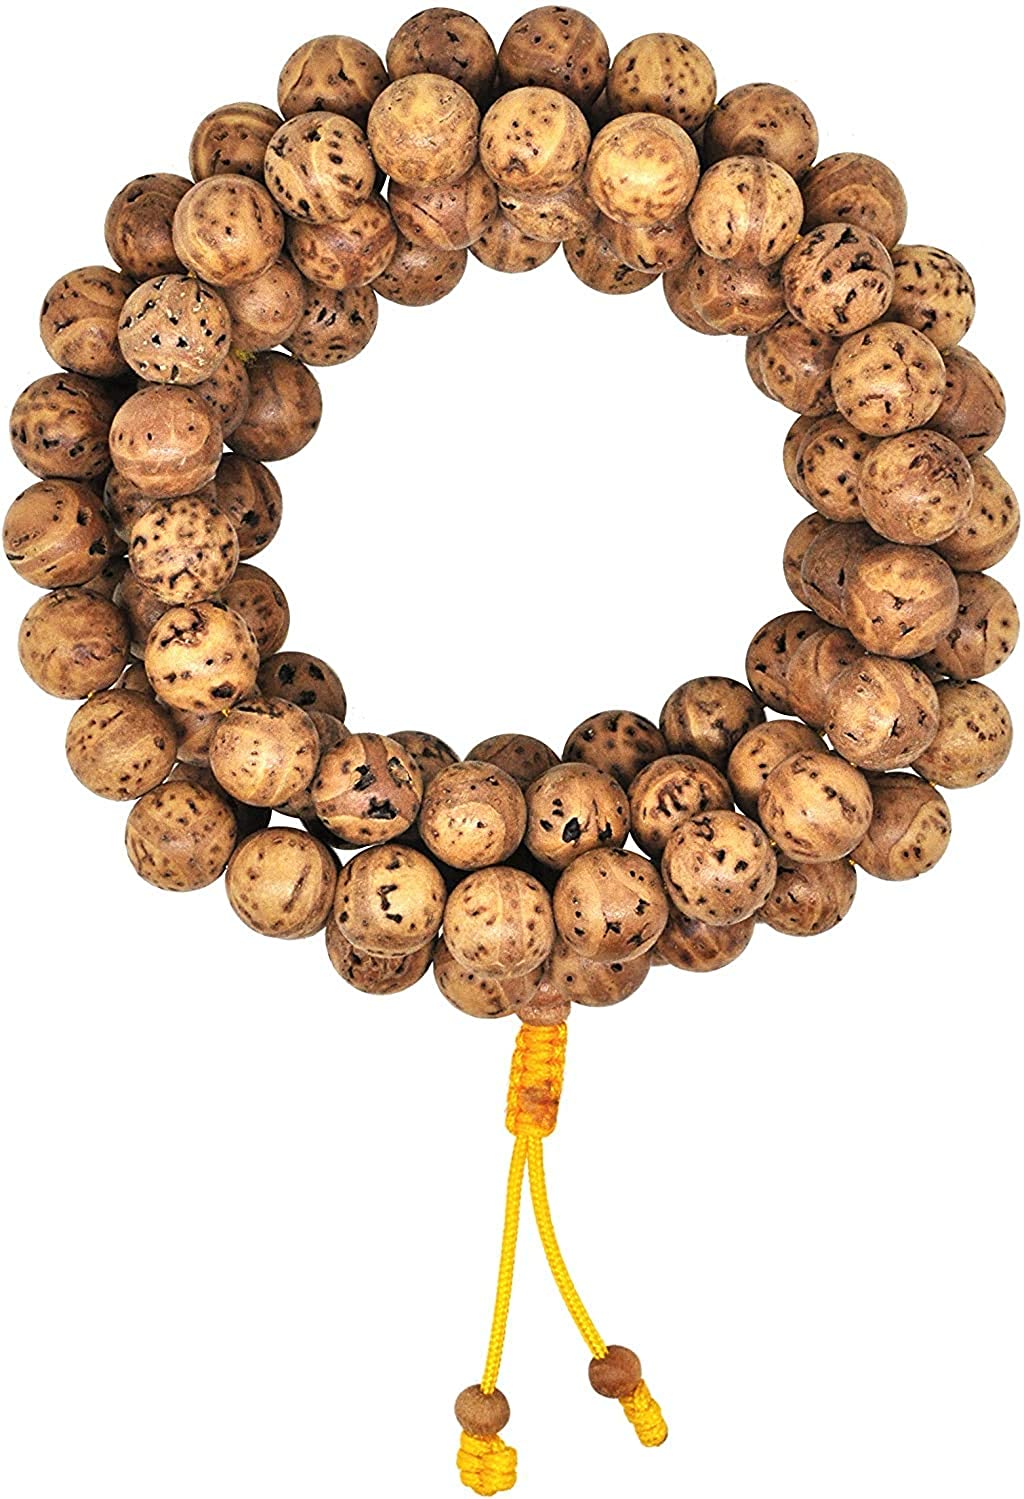 Unisex Yoga Meditation 108 Tibetan Natural Bodhi Seeds Prayer Beads Mala Wrap Bracelet Necklace (Polished Dragon Eye Bodhi Seeds)